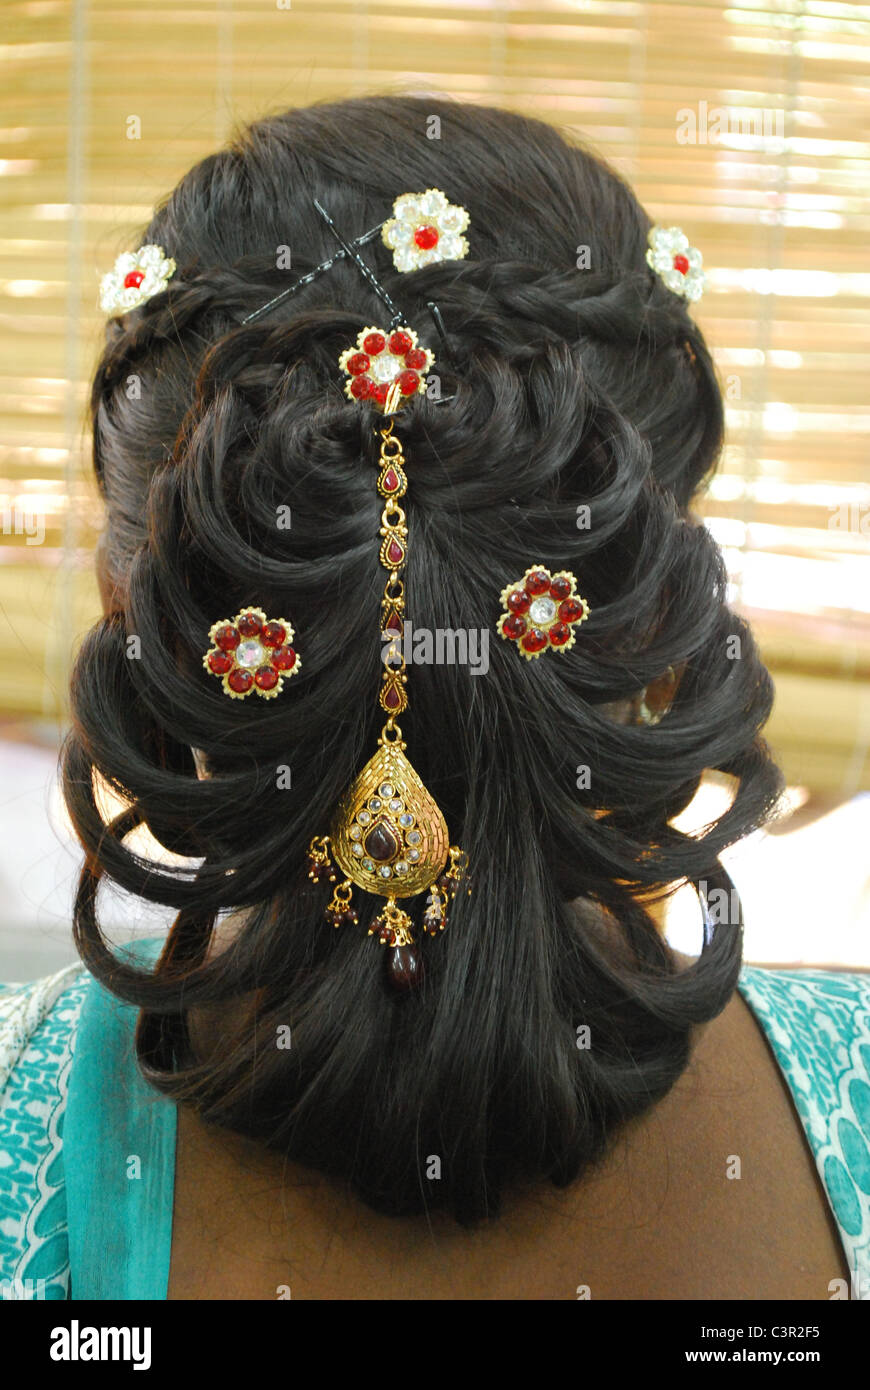 Pretty Bridesmaids Wedding Hairstyles for Long Hair  FashionShala